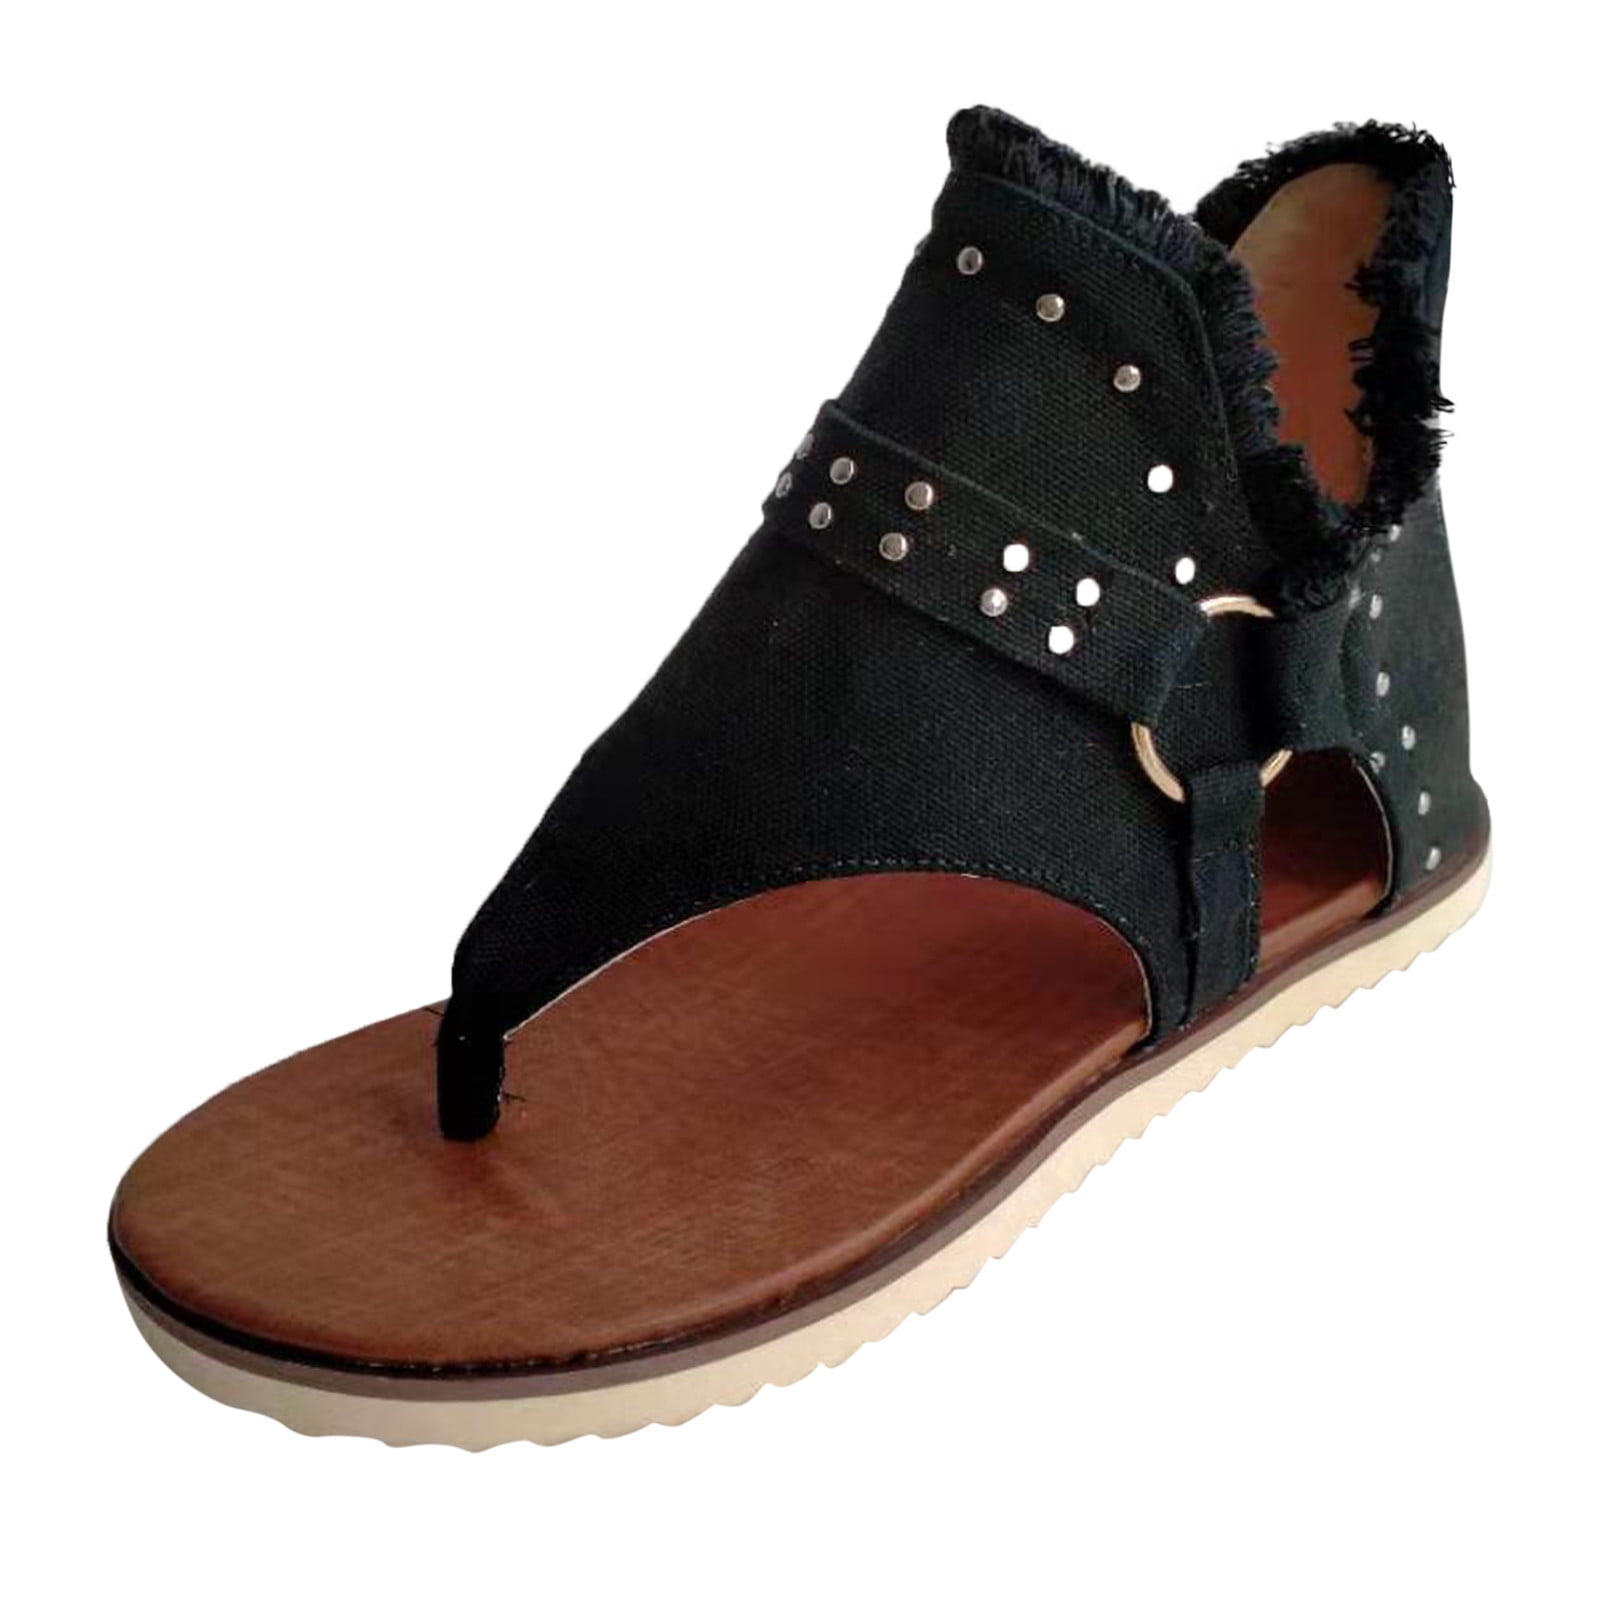 Posh Gladiator Sandals For Women Comfort Suede Flat Flip Flops Sandals Casual Beach Zipper Boots Sandals 